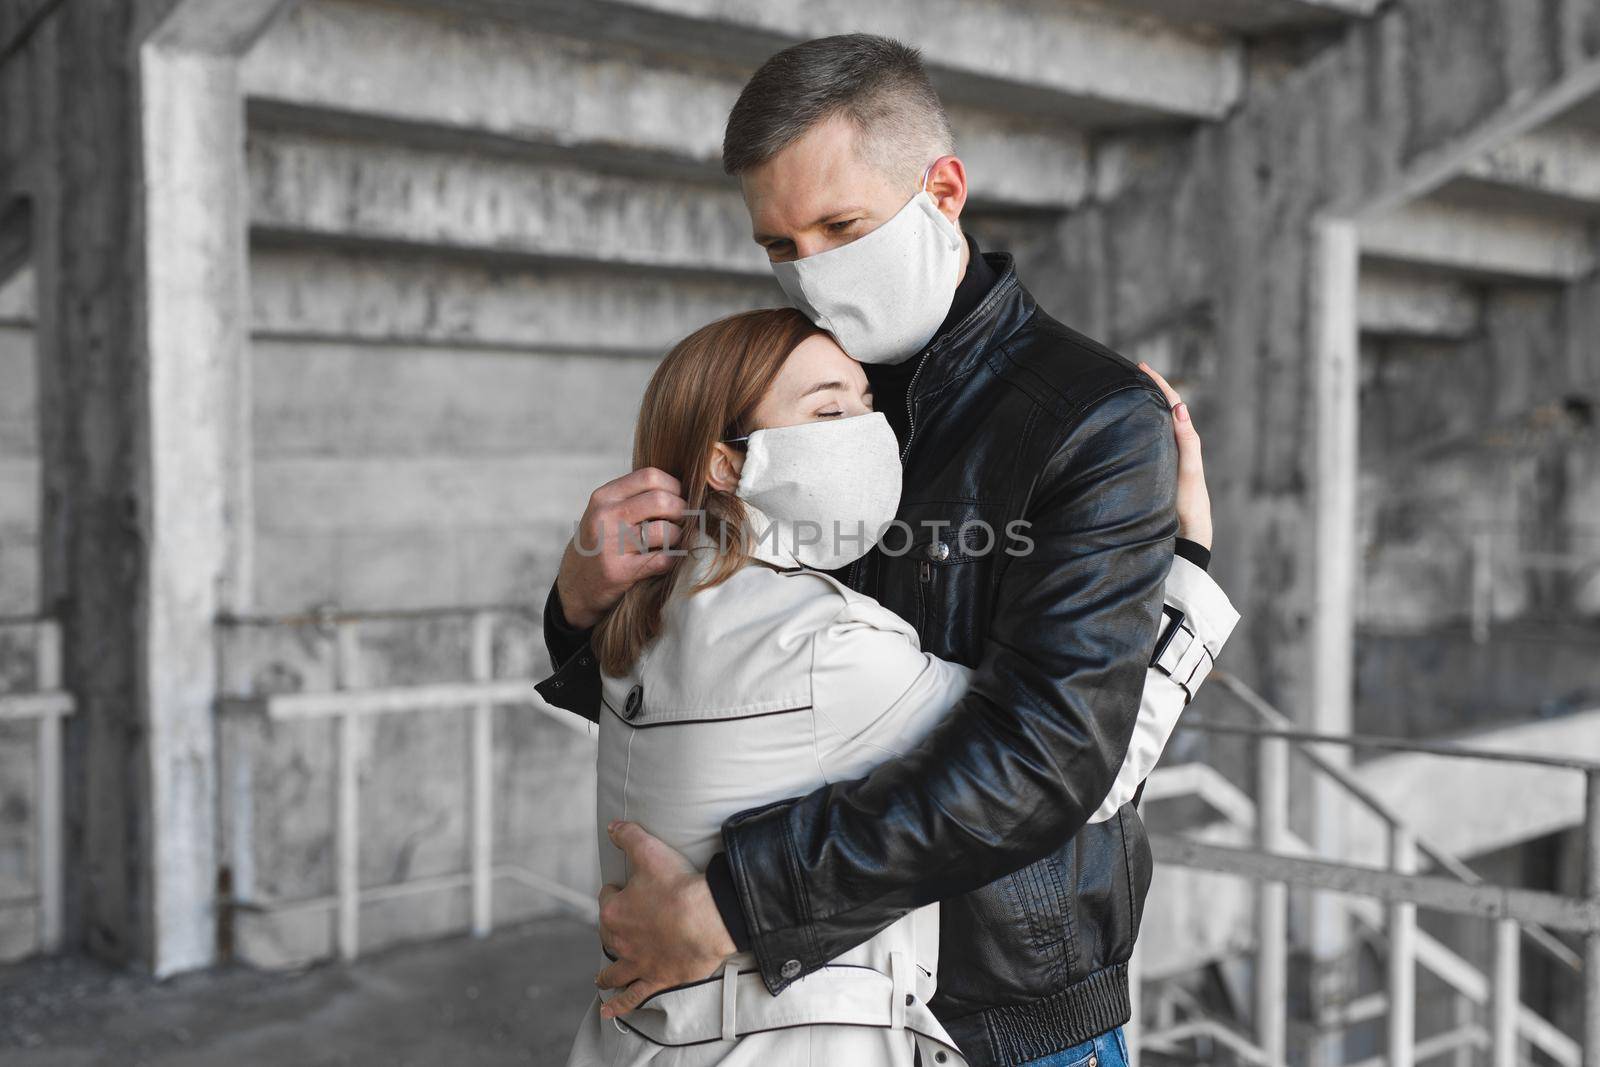 Masked man and woman embrace. Coronavirus. Covid19 by StudioPeace